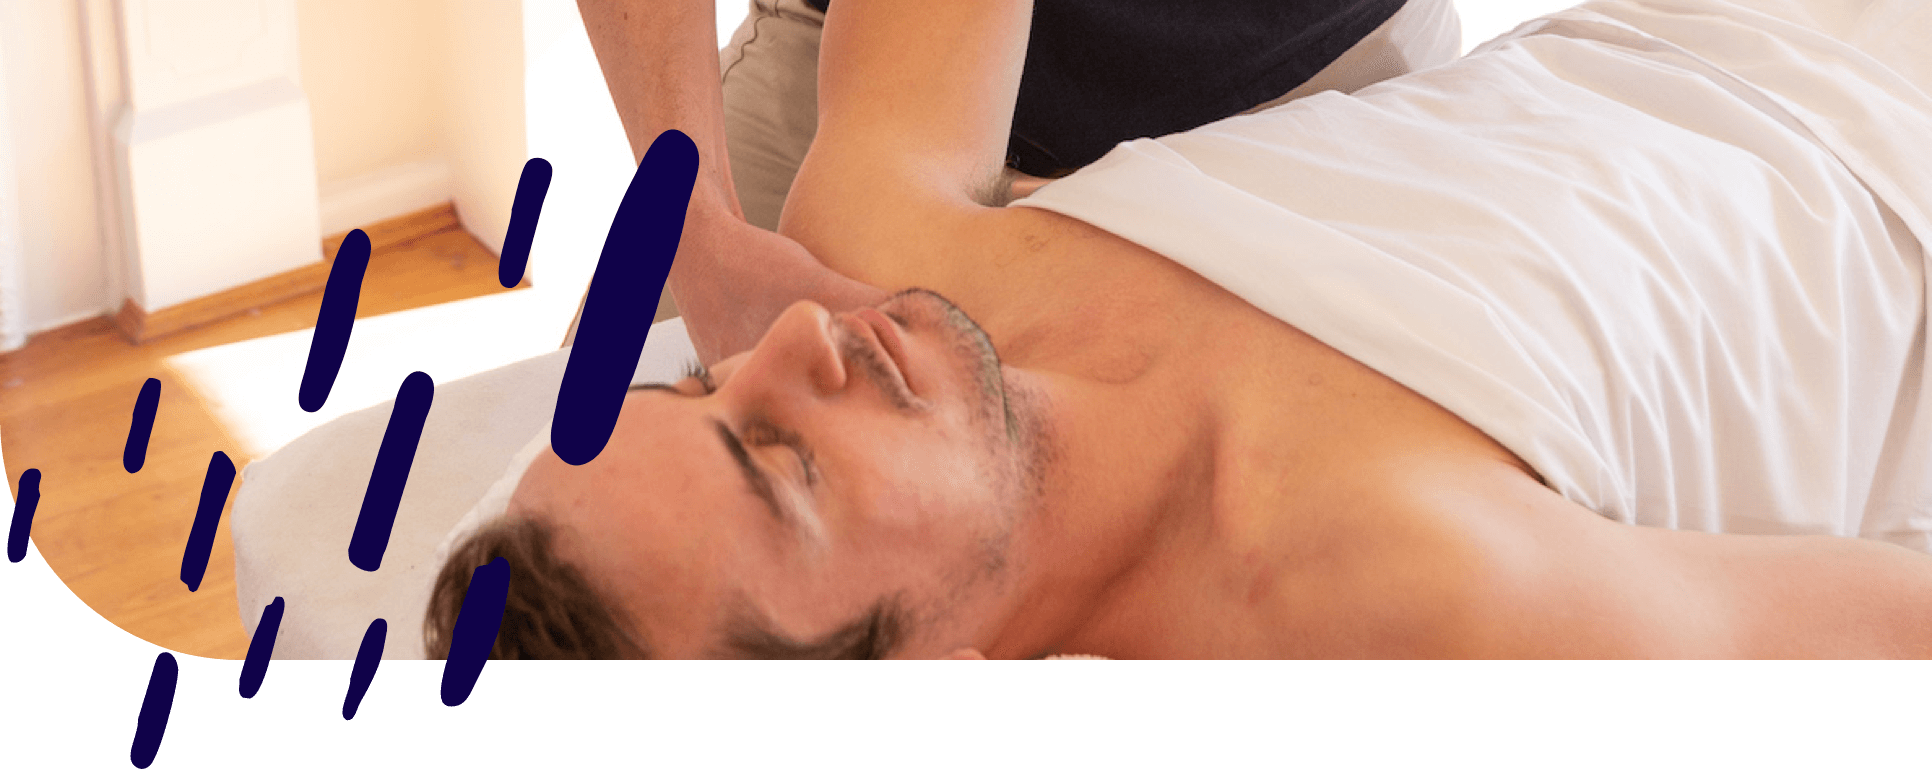 Best Massages Near Me Massage Near Me | Blys